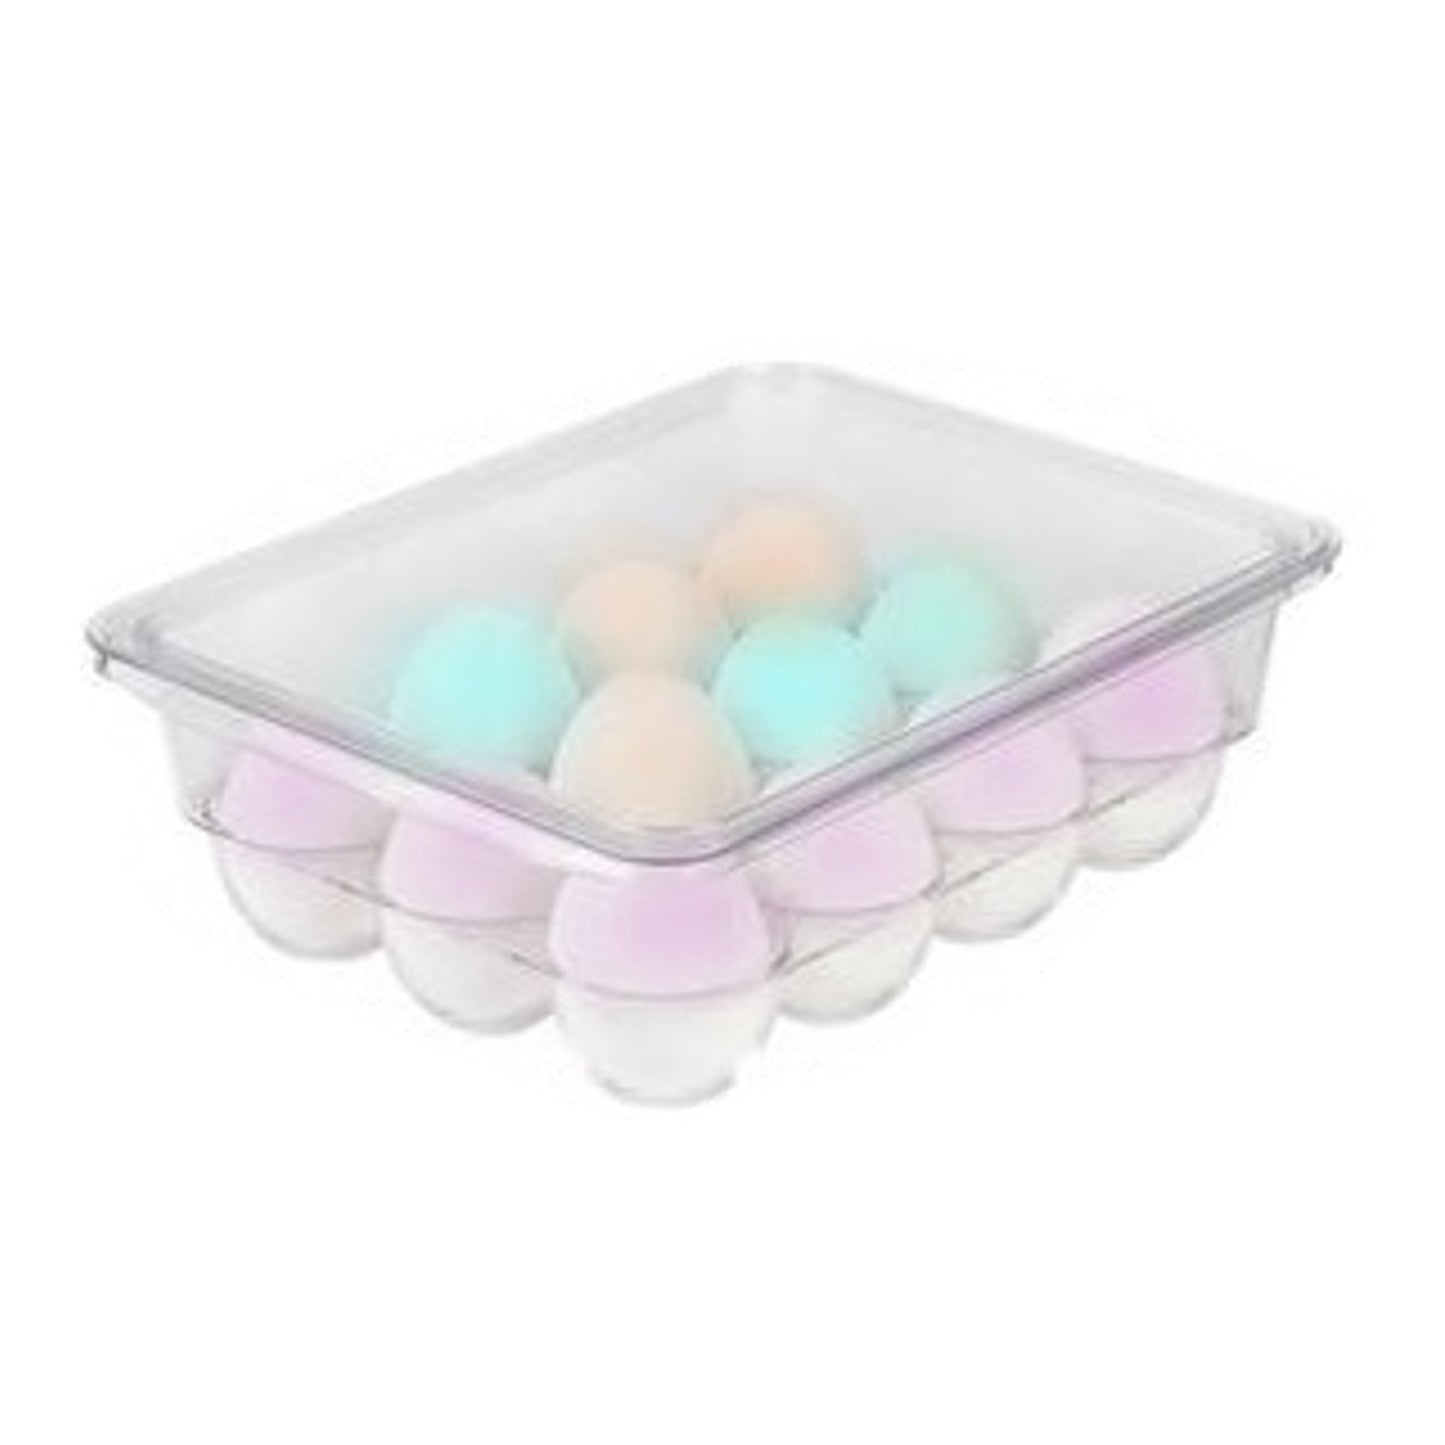 Acrylic Egg Container - 1 dozen sized